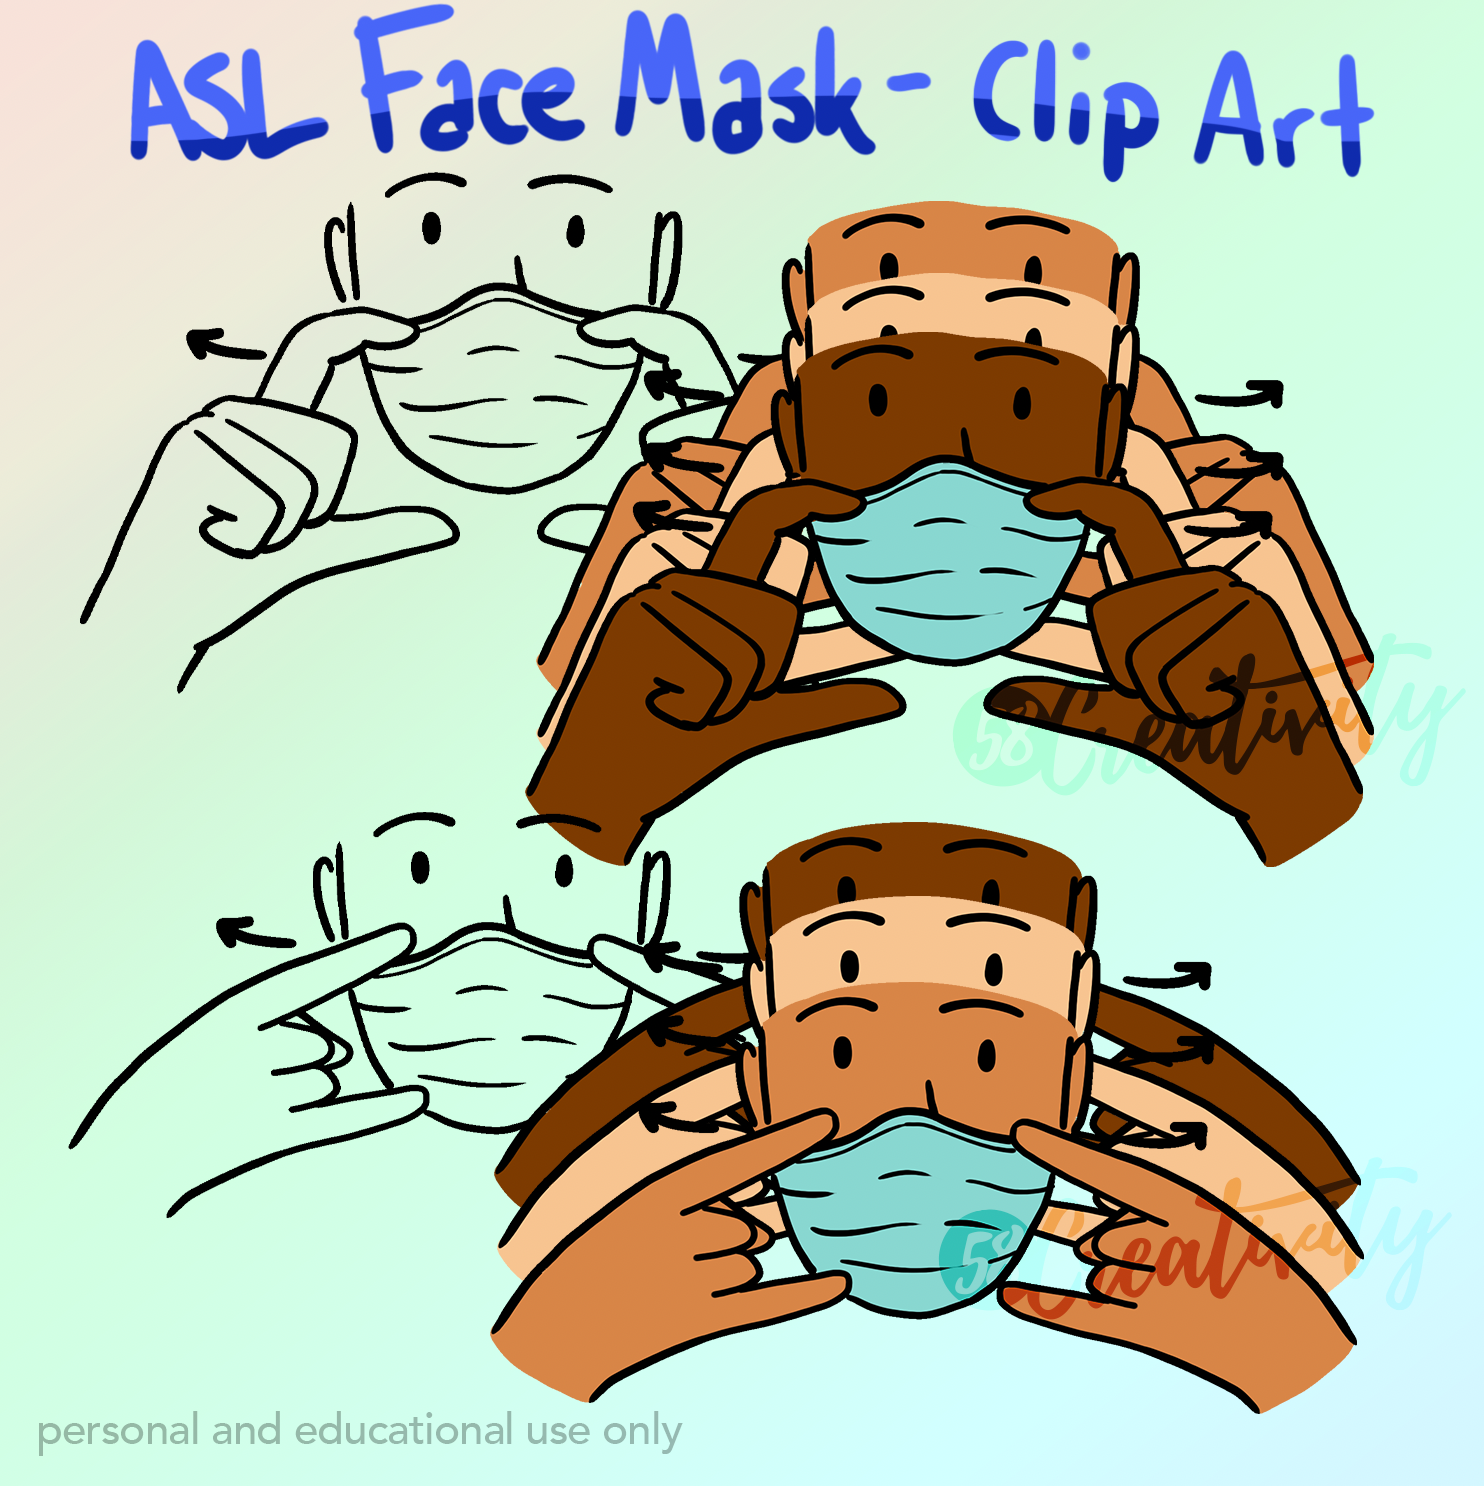 ASL Self-Ink Stamp